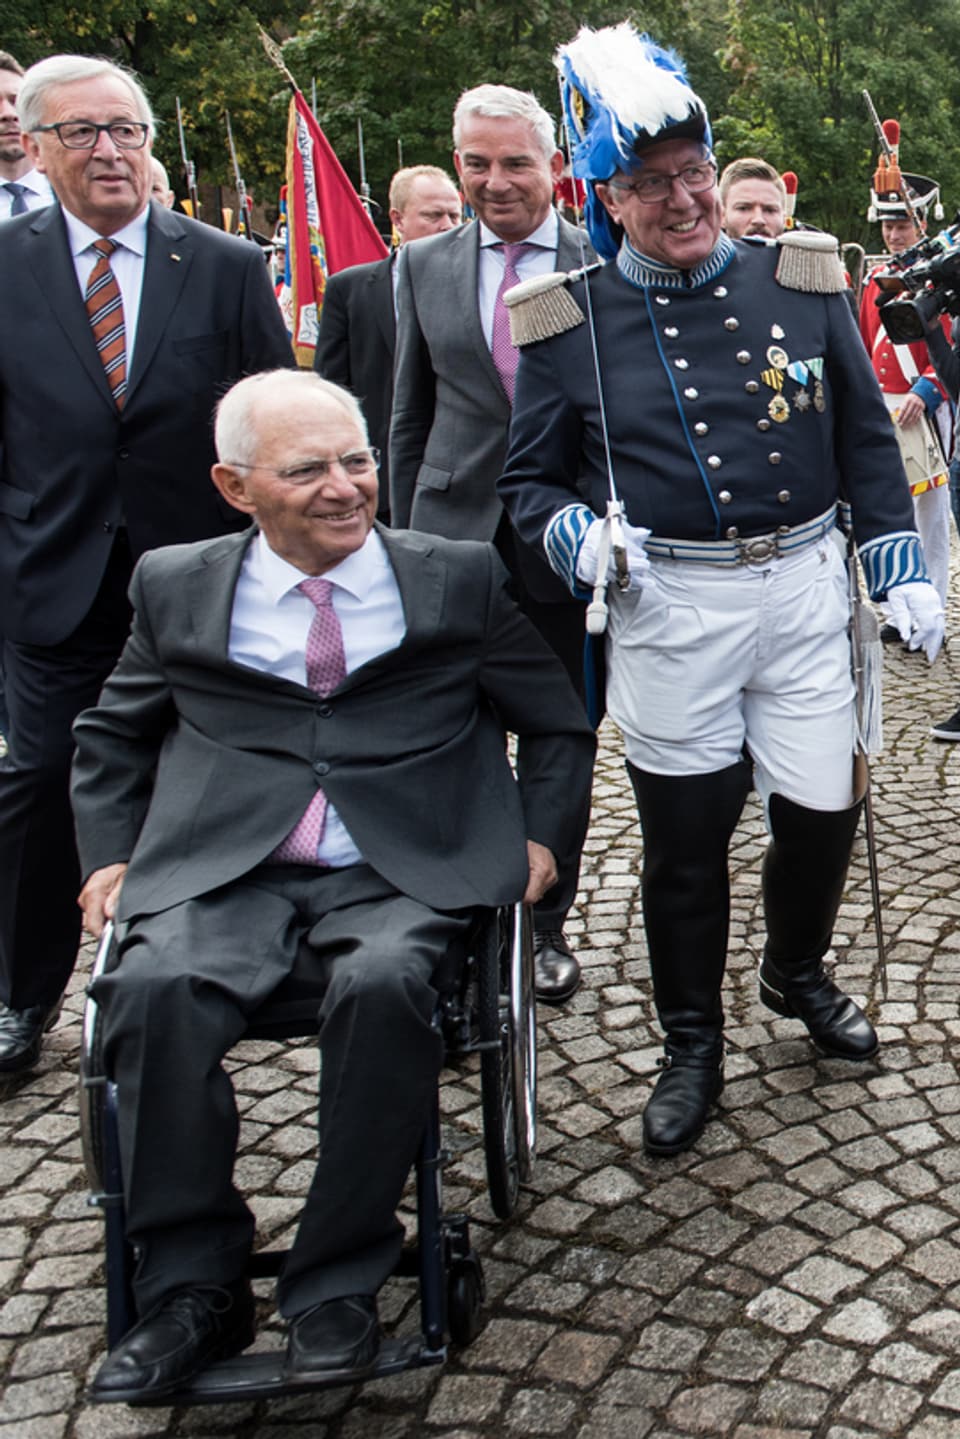 Wolfgang Schäuble im Rollstuhl an einer Feier.